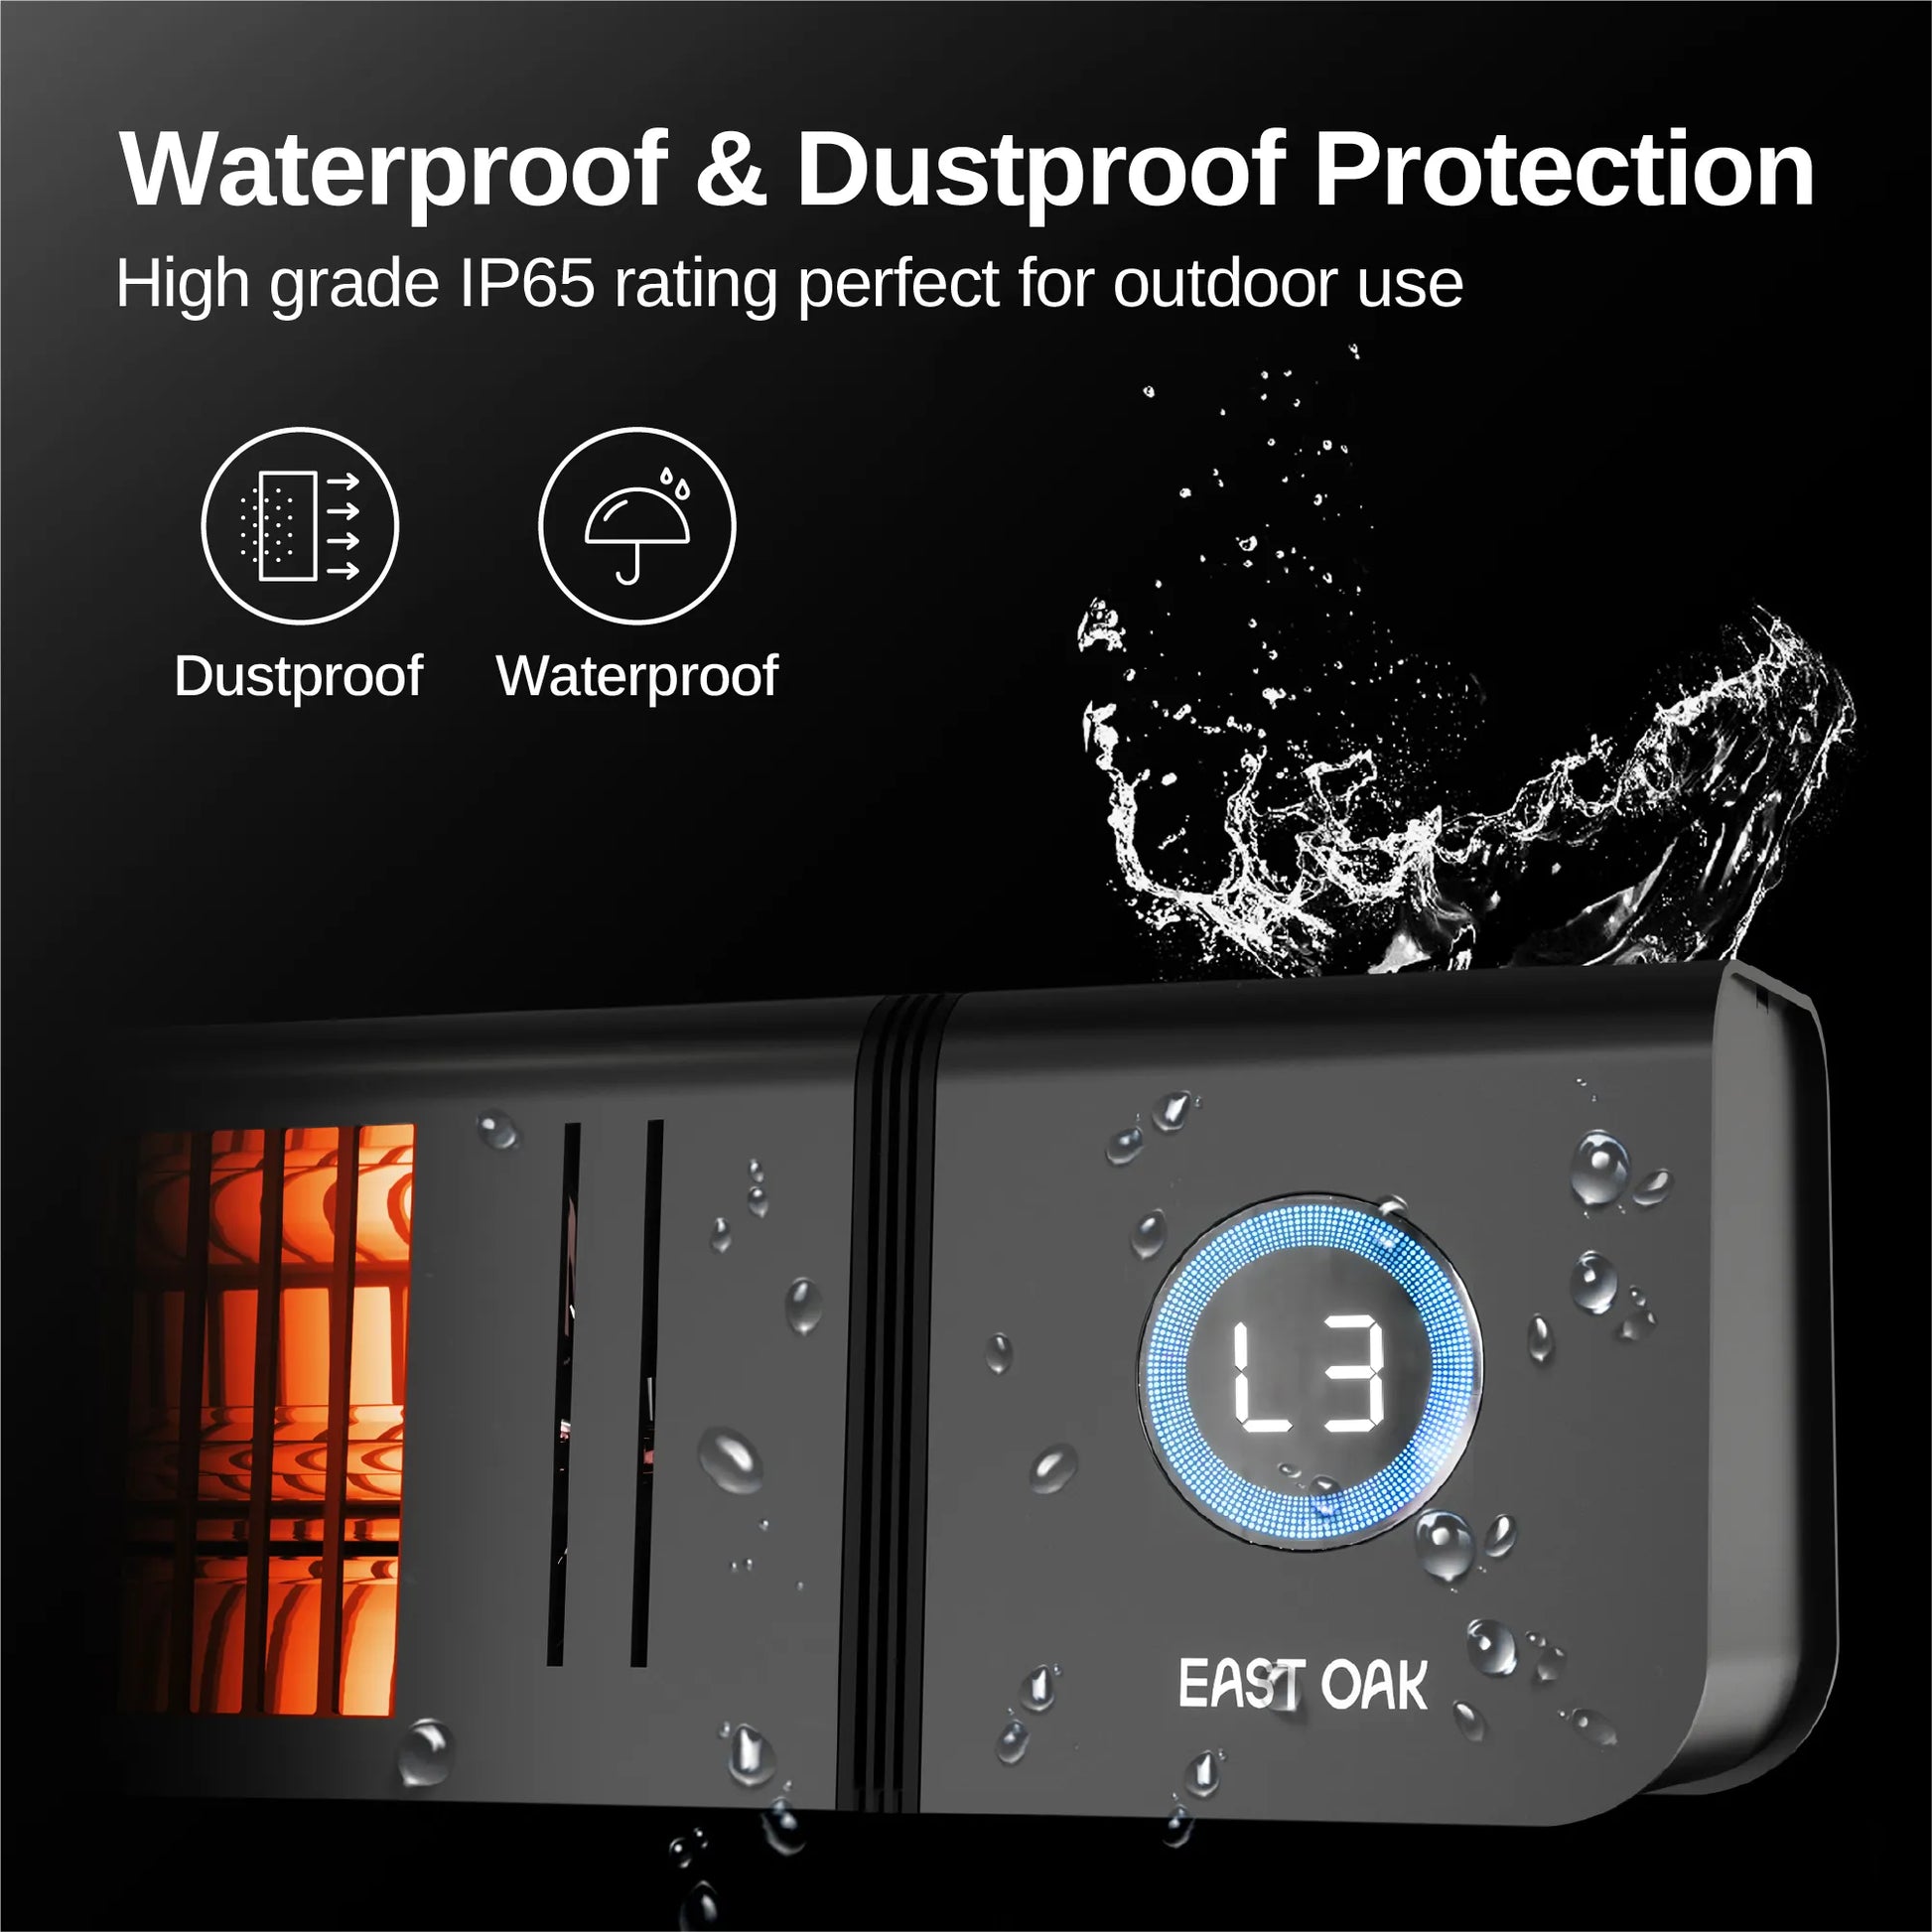 Wall-Outdoor-Patio-Electric-Heater-Waterproof_a3314328-f487-415f-b73c-10426c956207